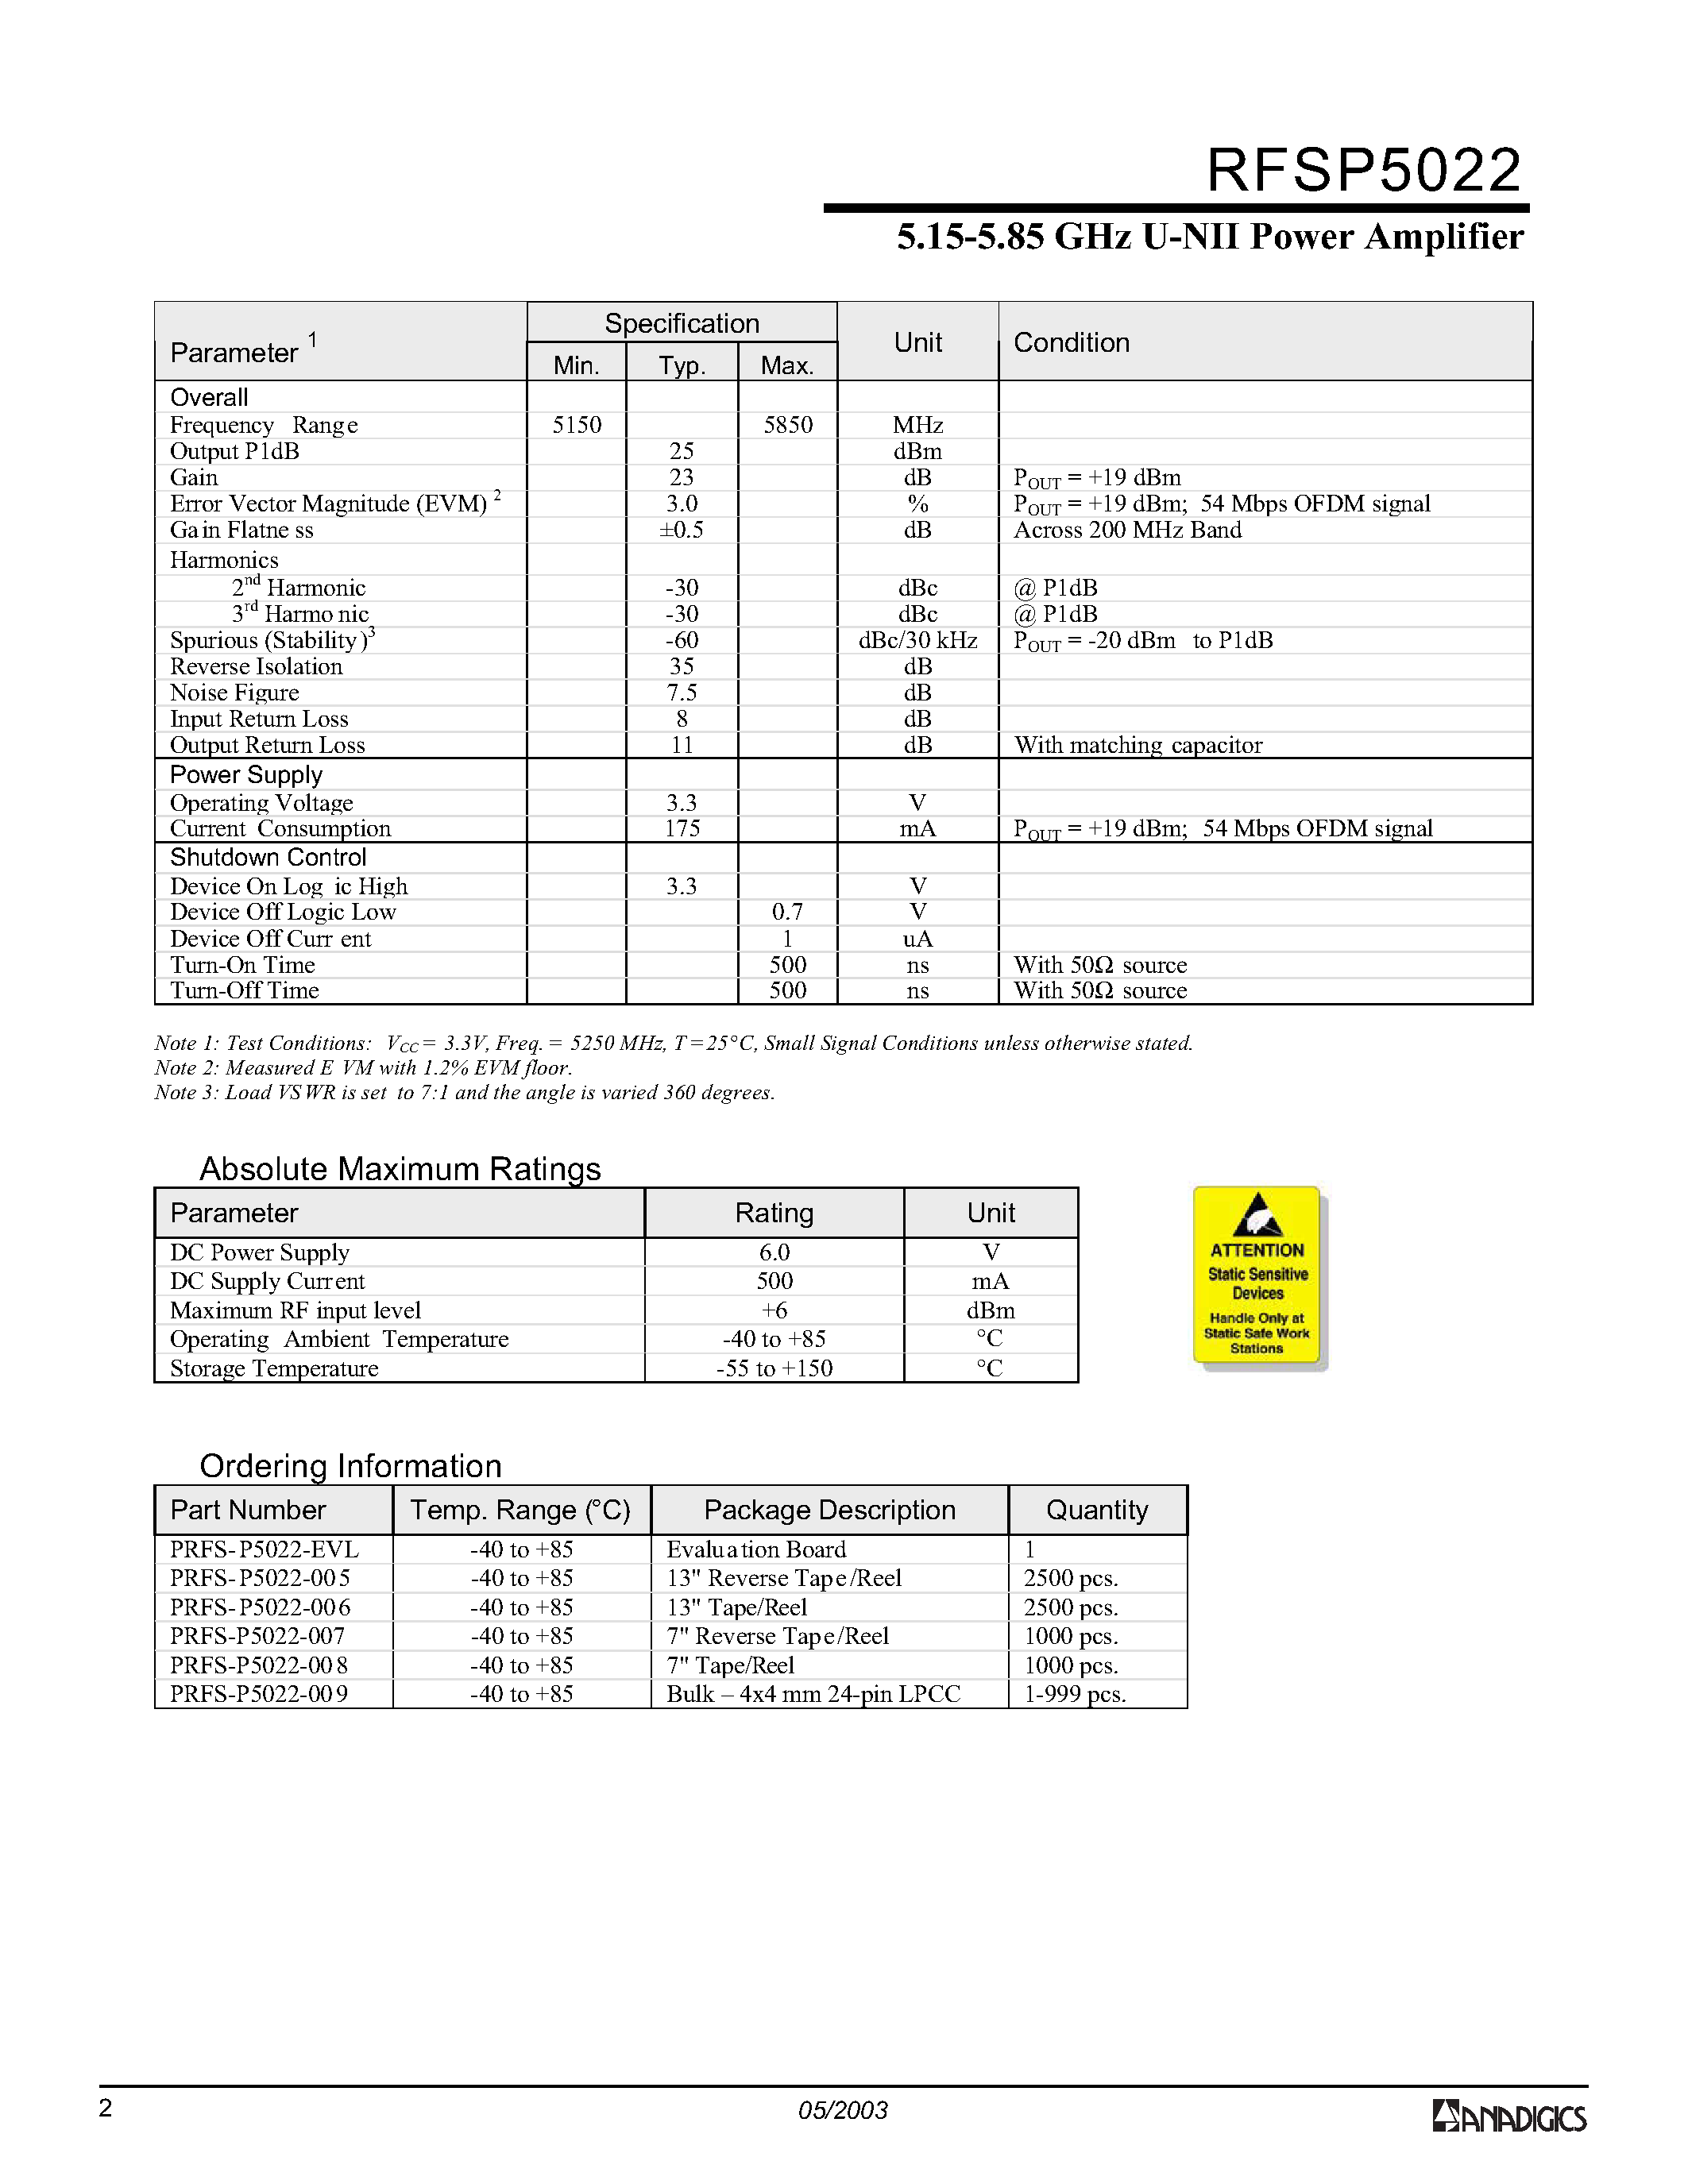 Даташит PRFS-P5022-005 - 5.15-5.85 GHz U-NII Power Amplifier страница 2